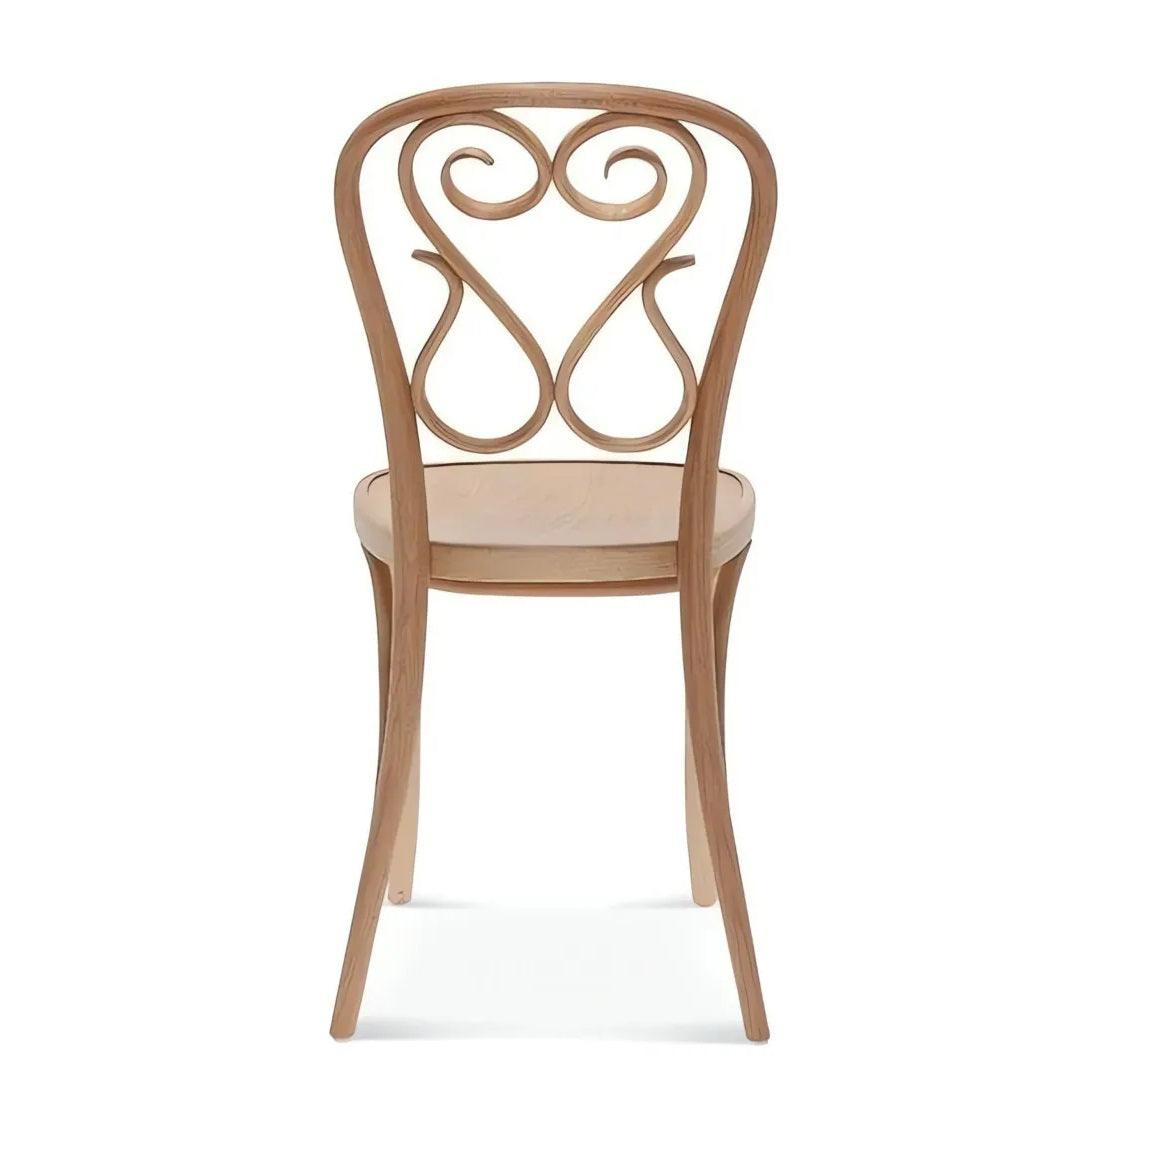 Krzesło A-4 lite drewno bukowe Fameg    Eye on Design